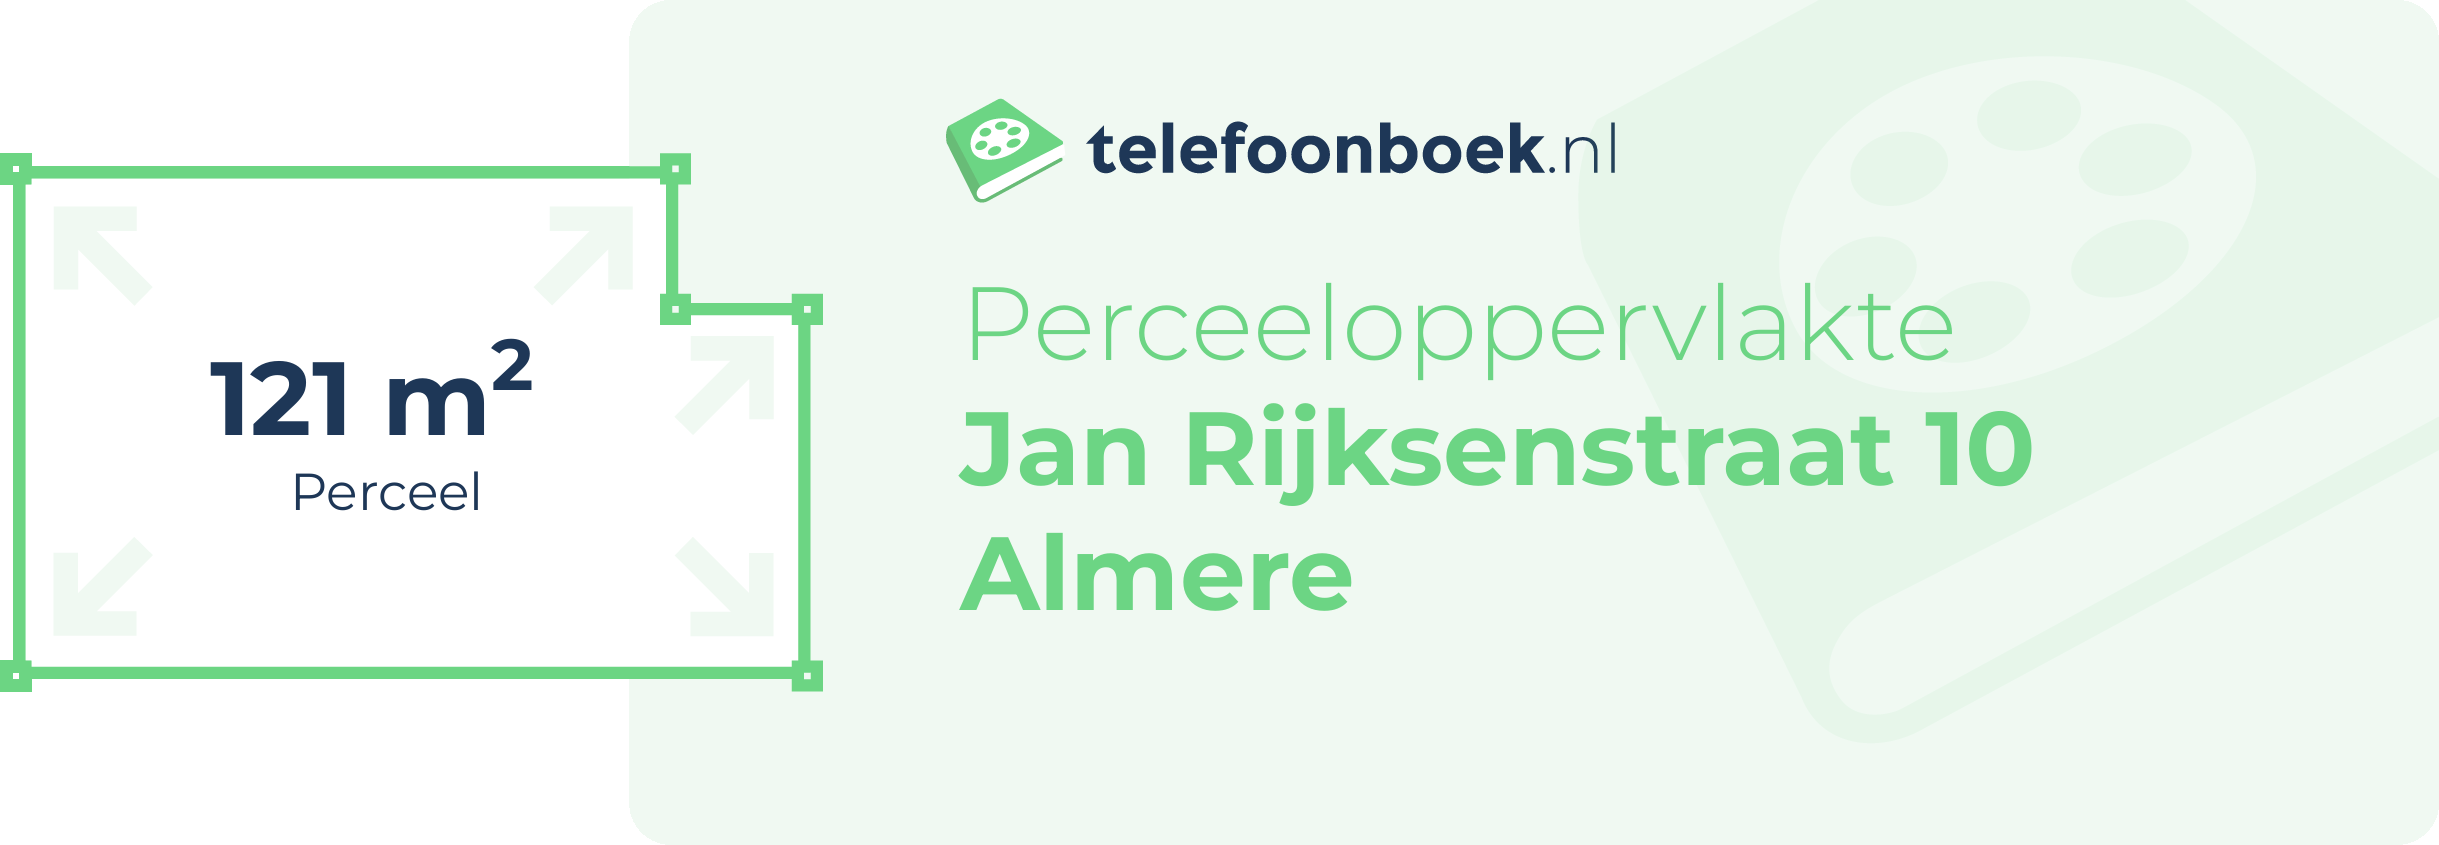 Perceeloppervlakte Jan Rijksenstraat 10 Almere